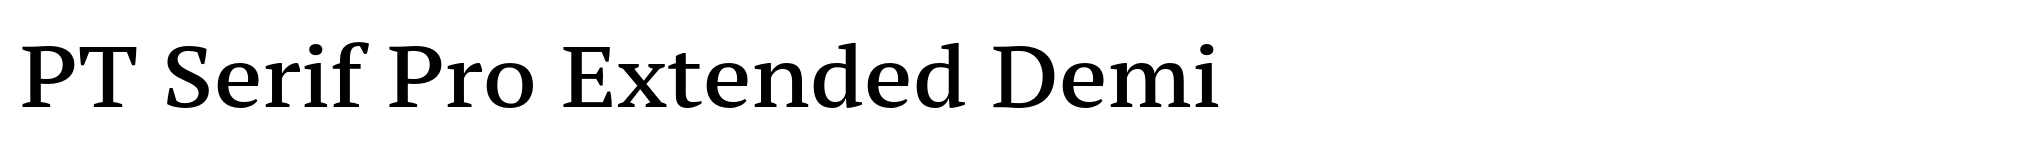 PT Serif Pro Extended Demi image